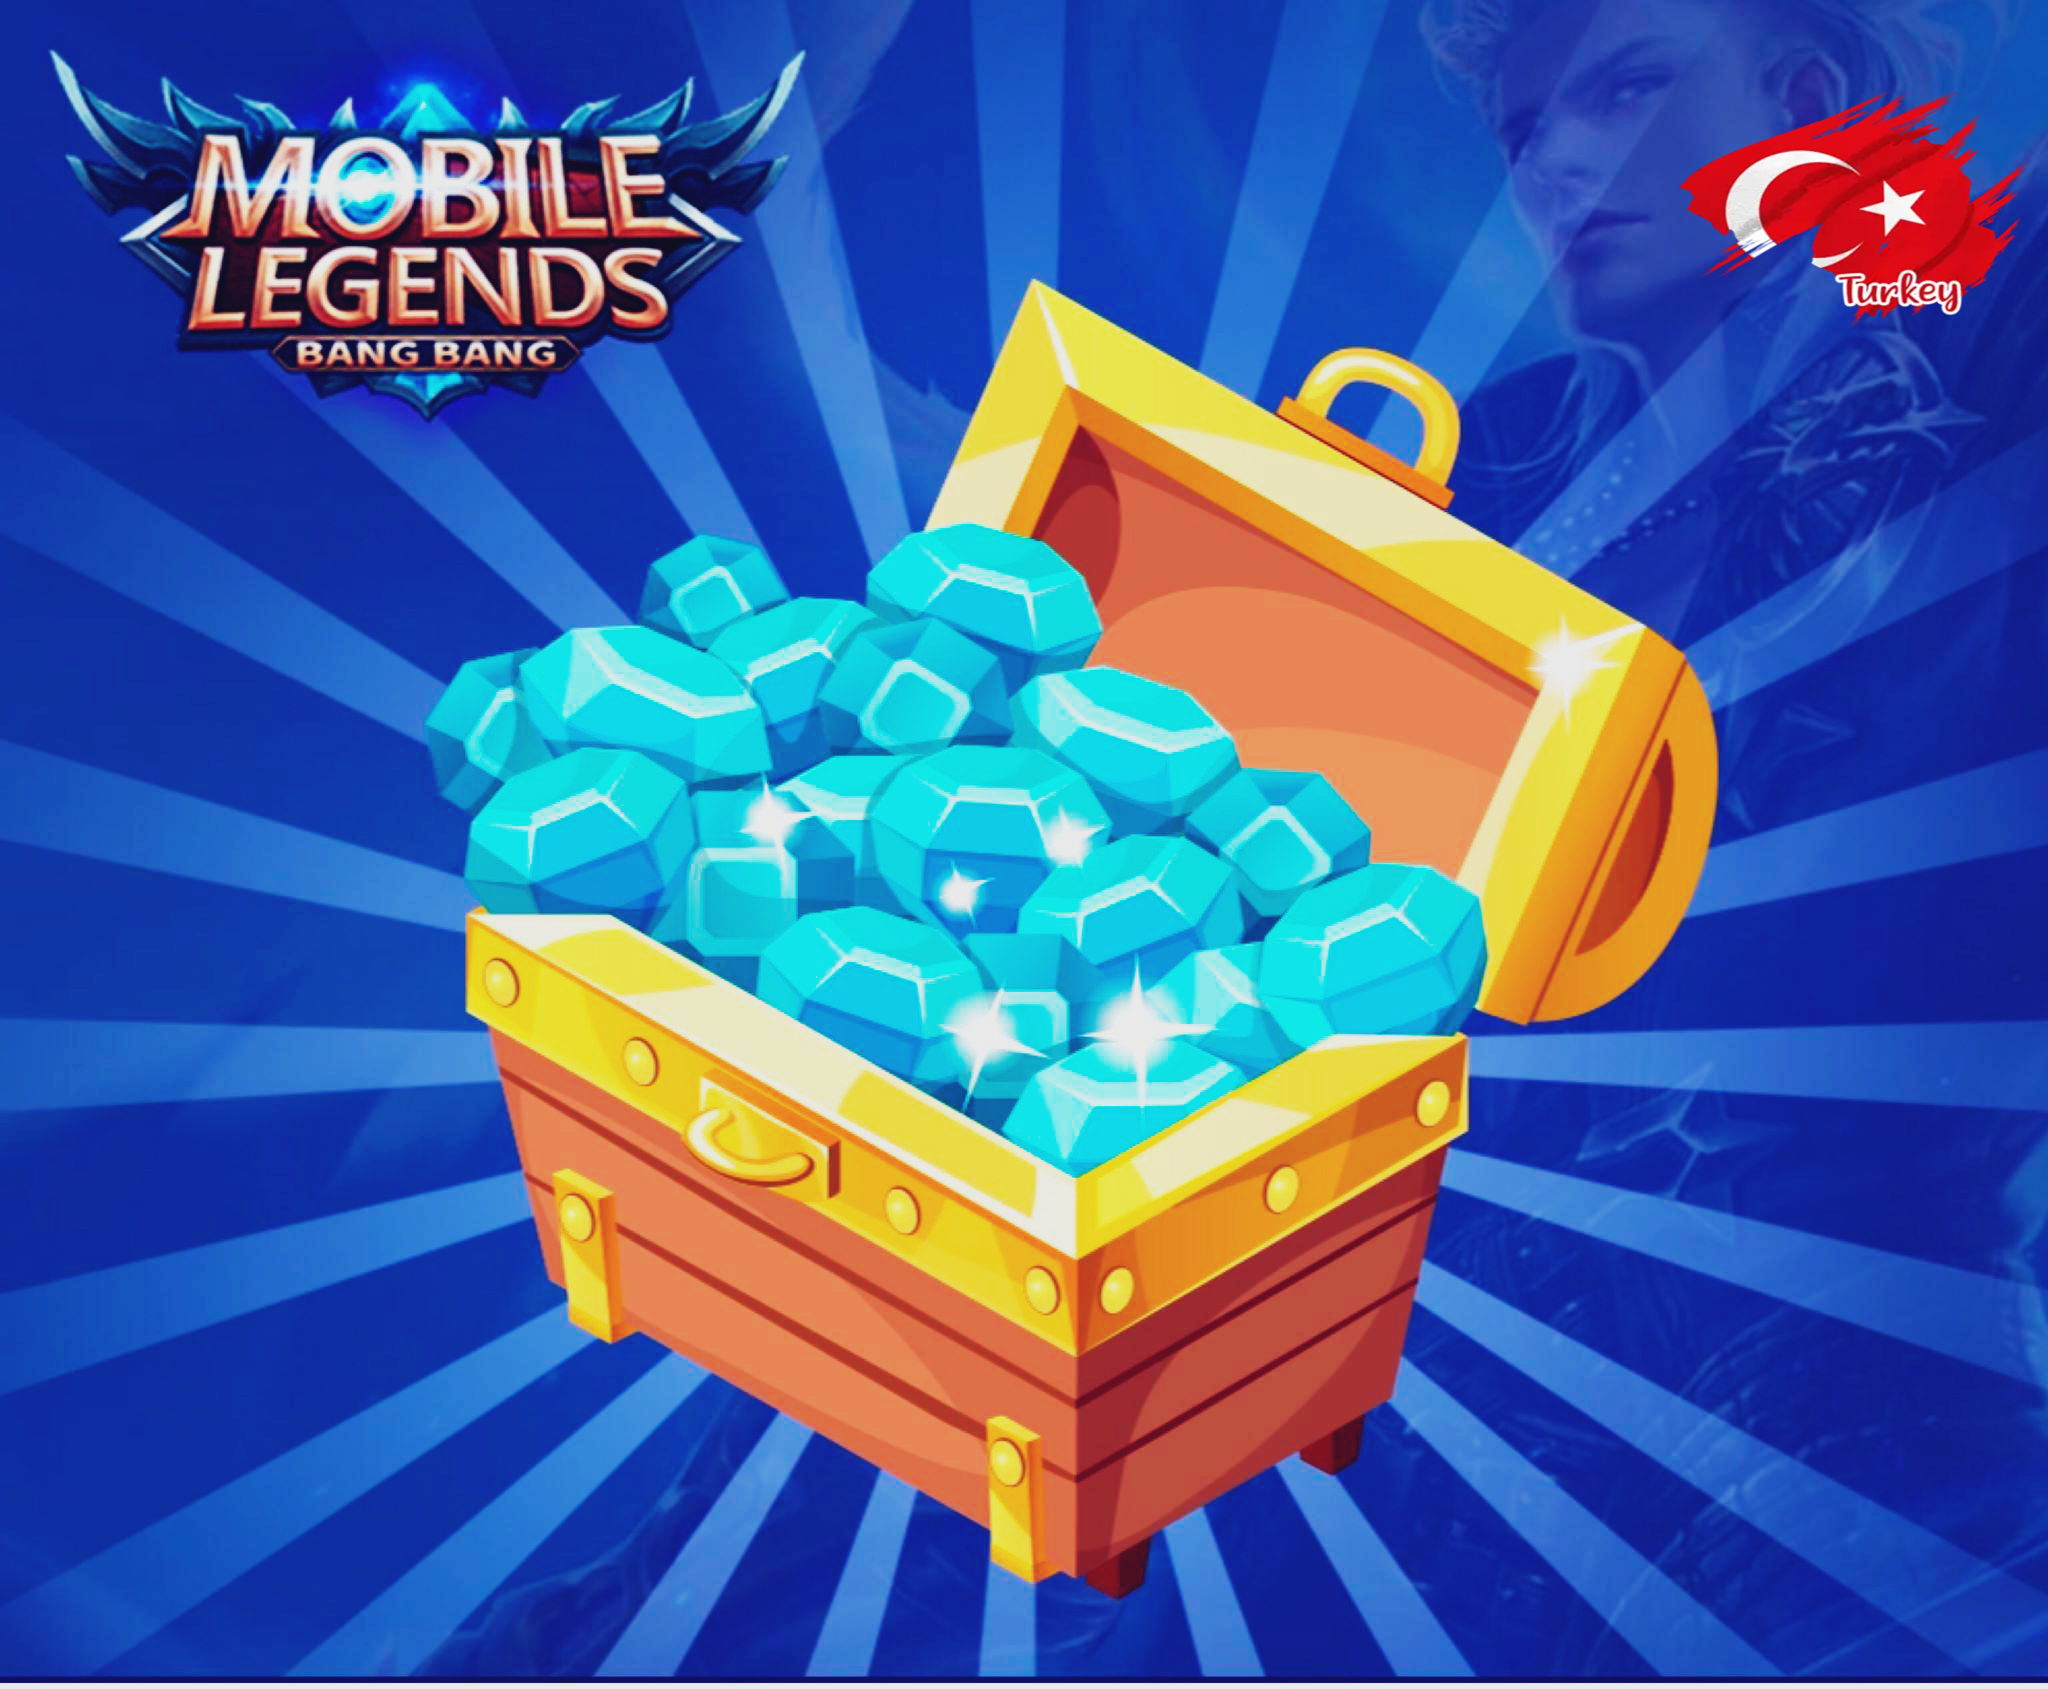 2242 Diamonds + 403 Bonus Mobile Legends TOP UP